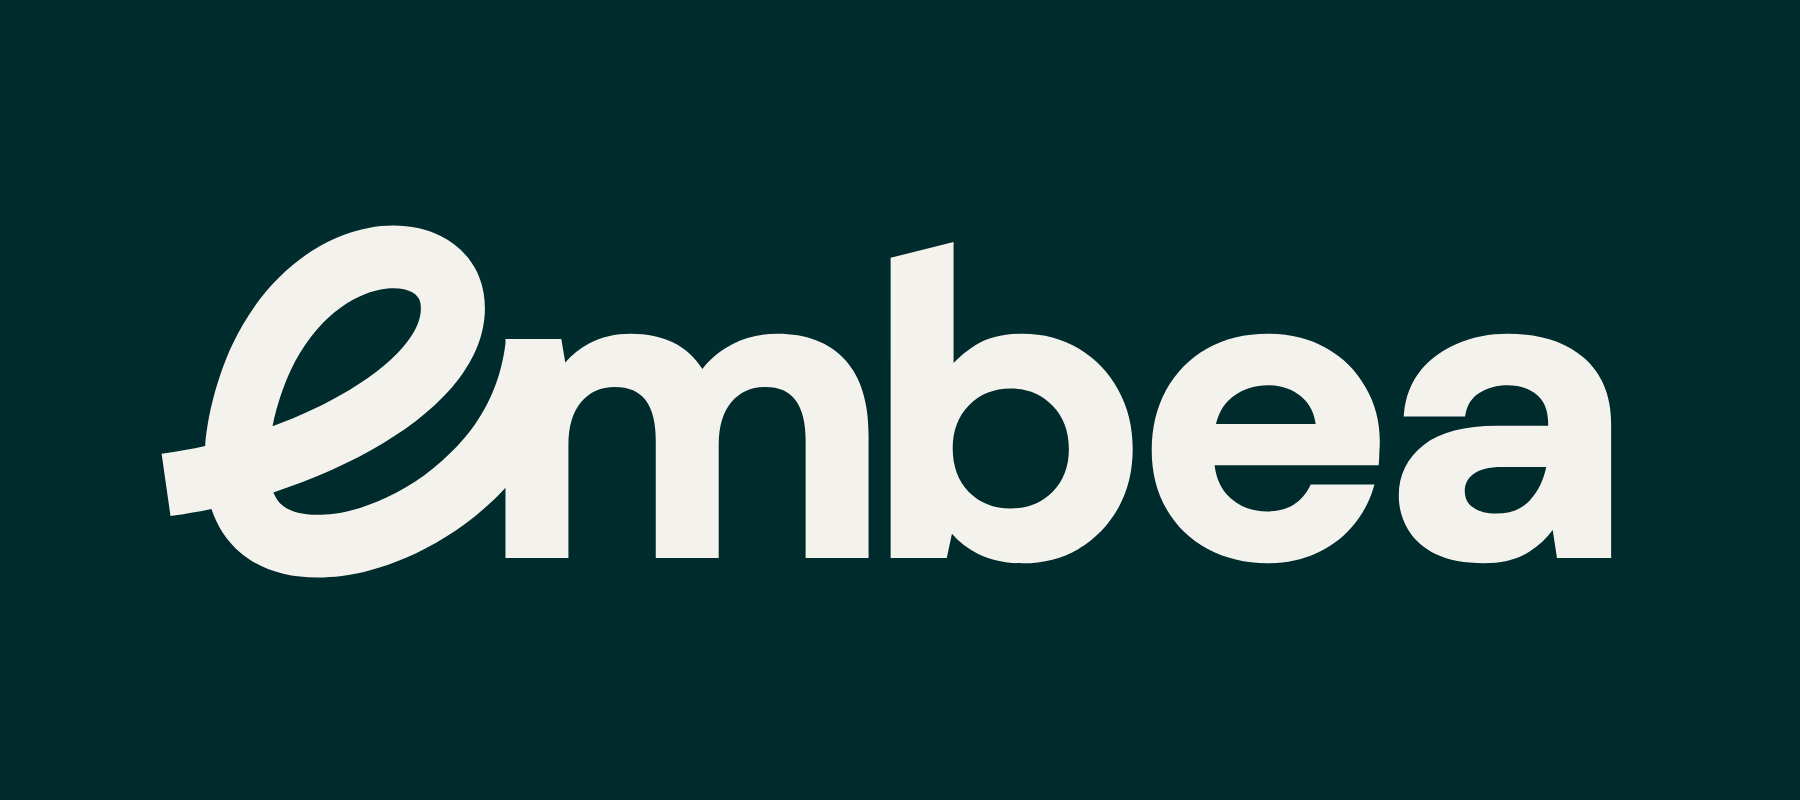 Insurtech startup Embea raises €4m seed funding to build pan-European embedded life insurance platform